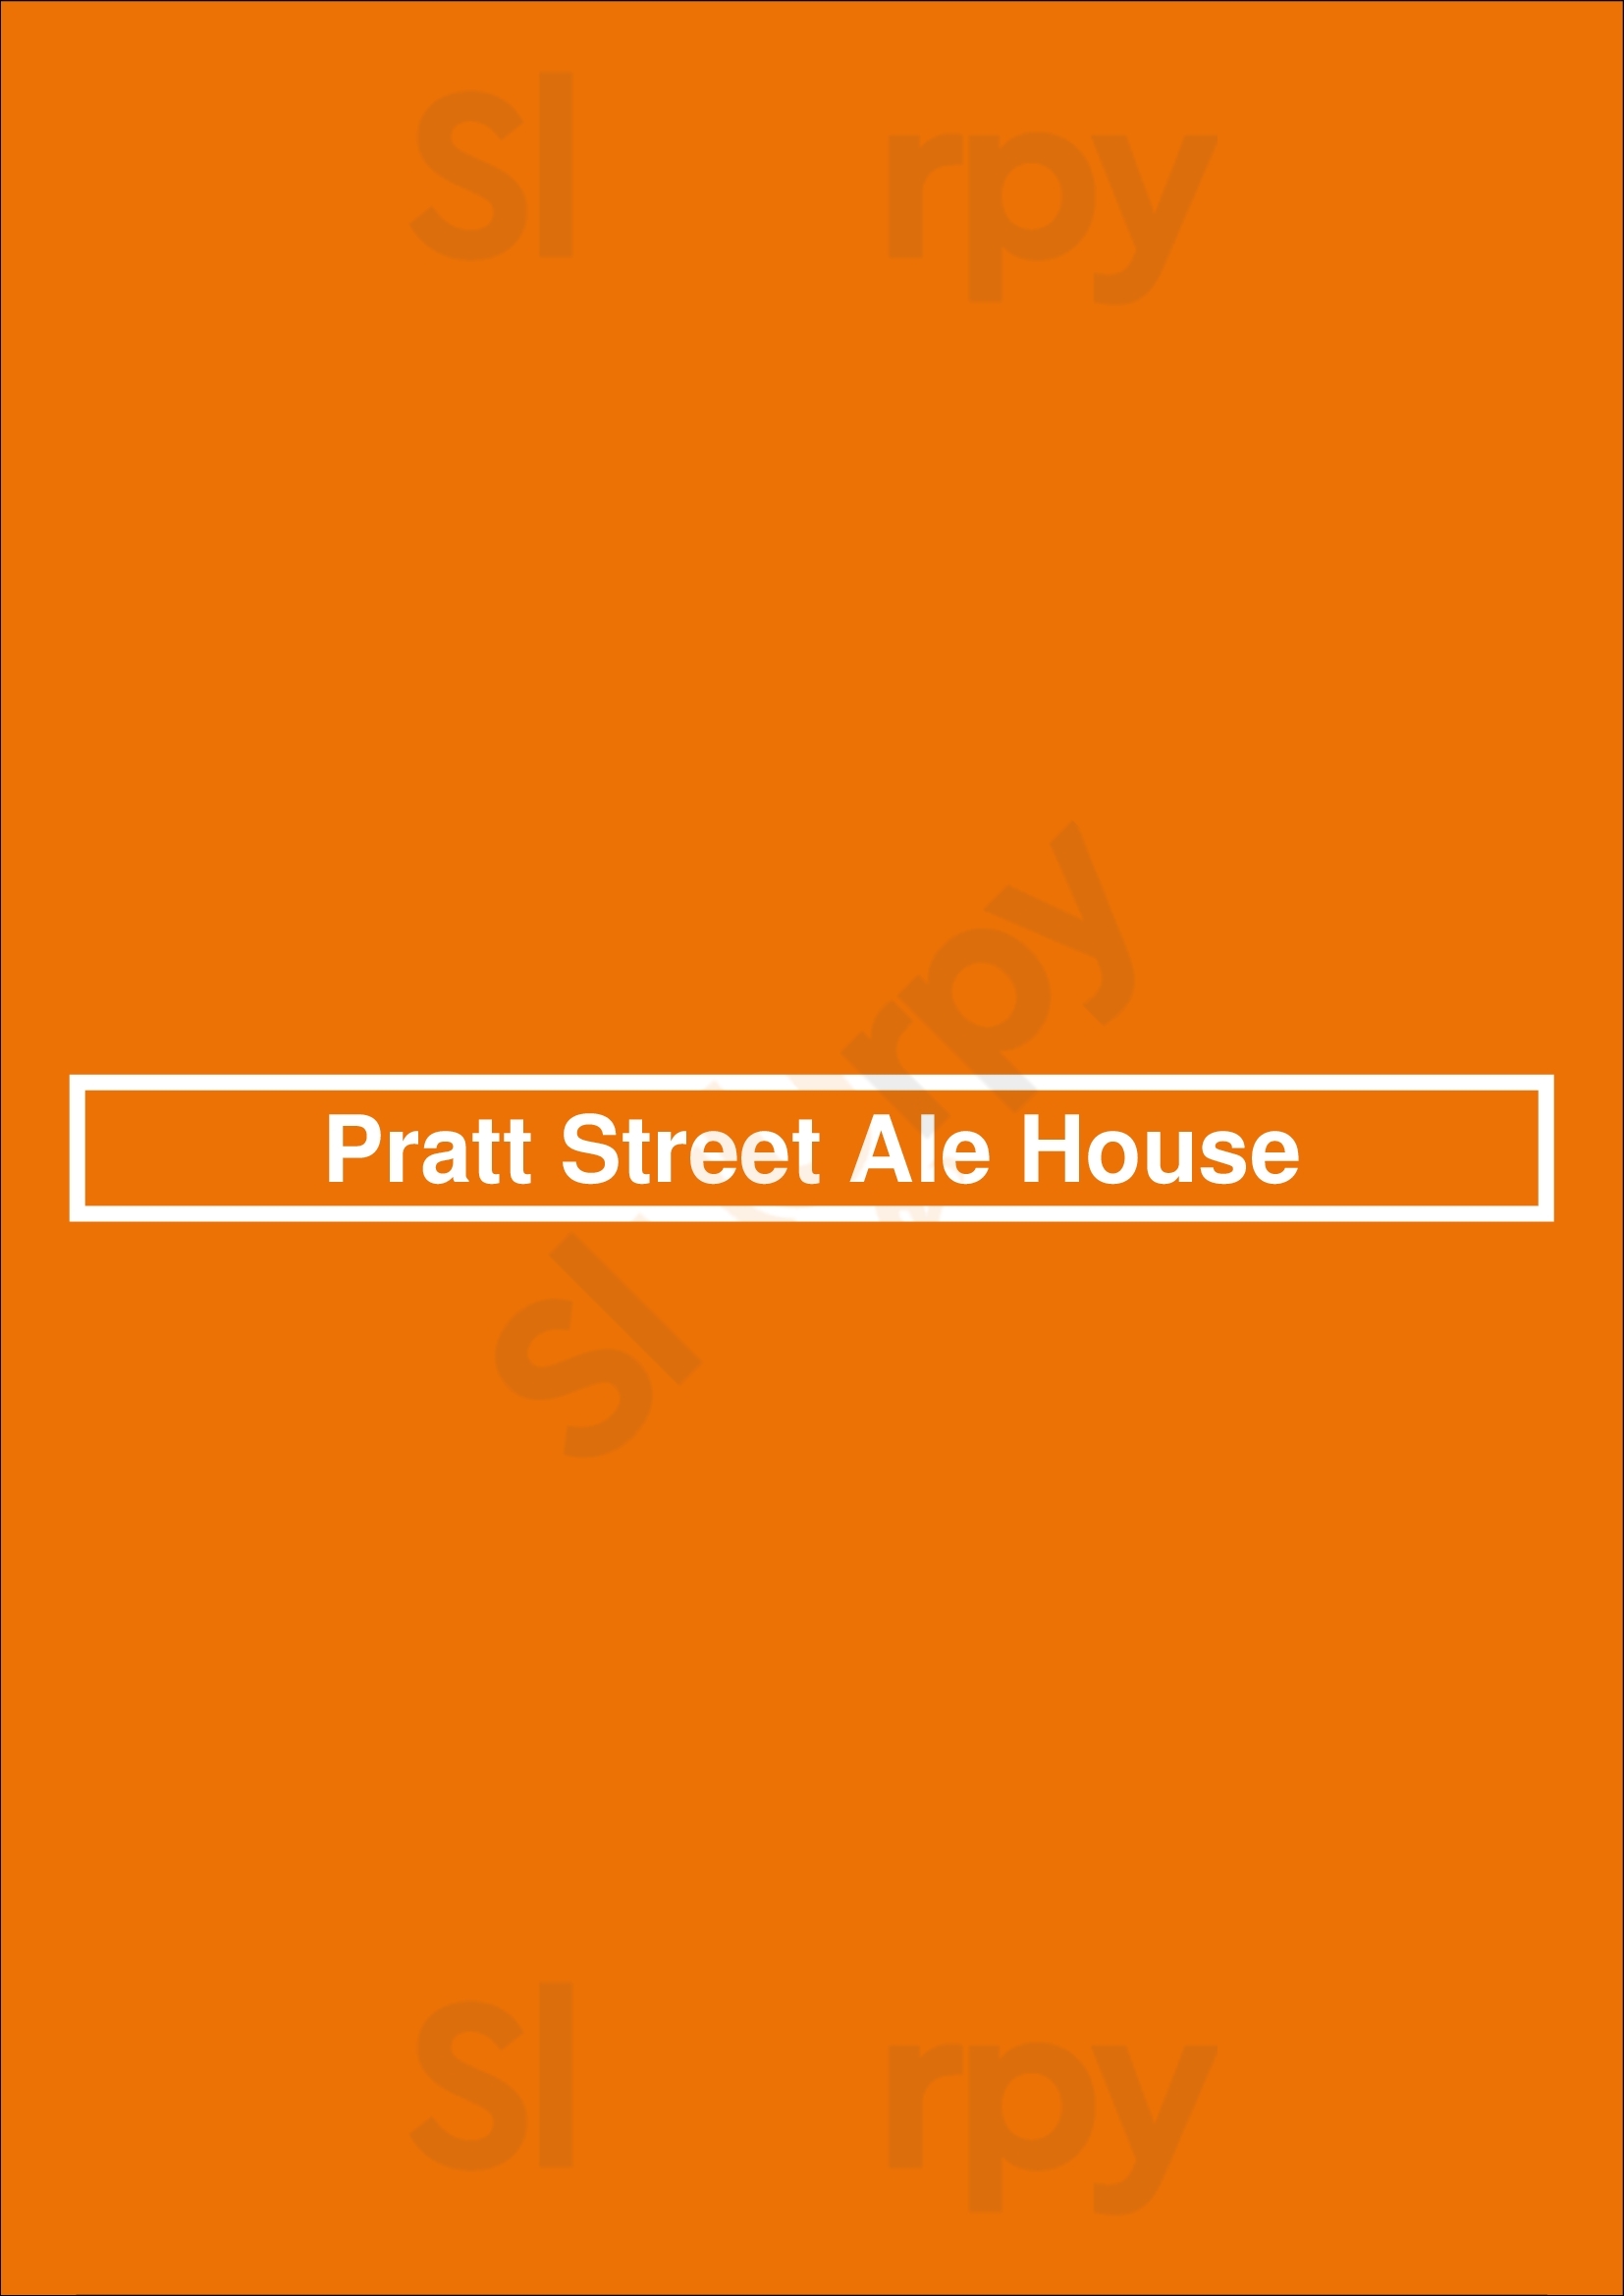 Pratt Street Ale House Baltimore Menu - 1